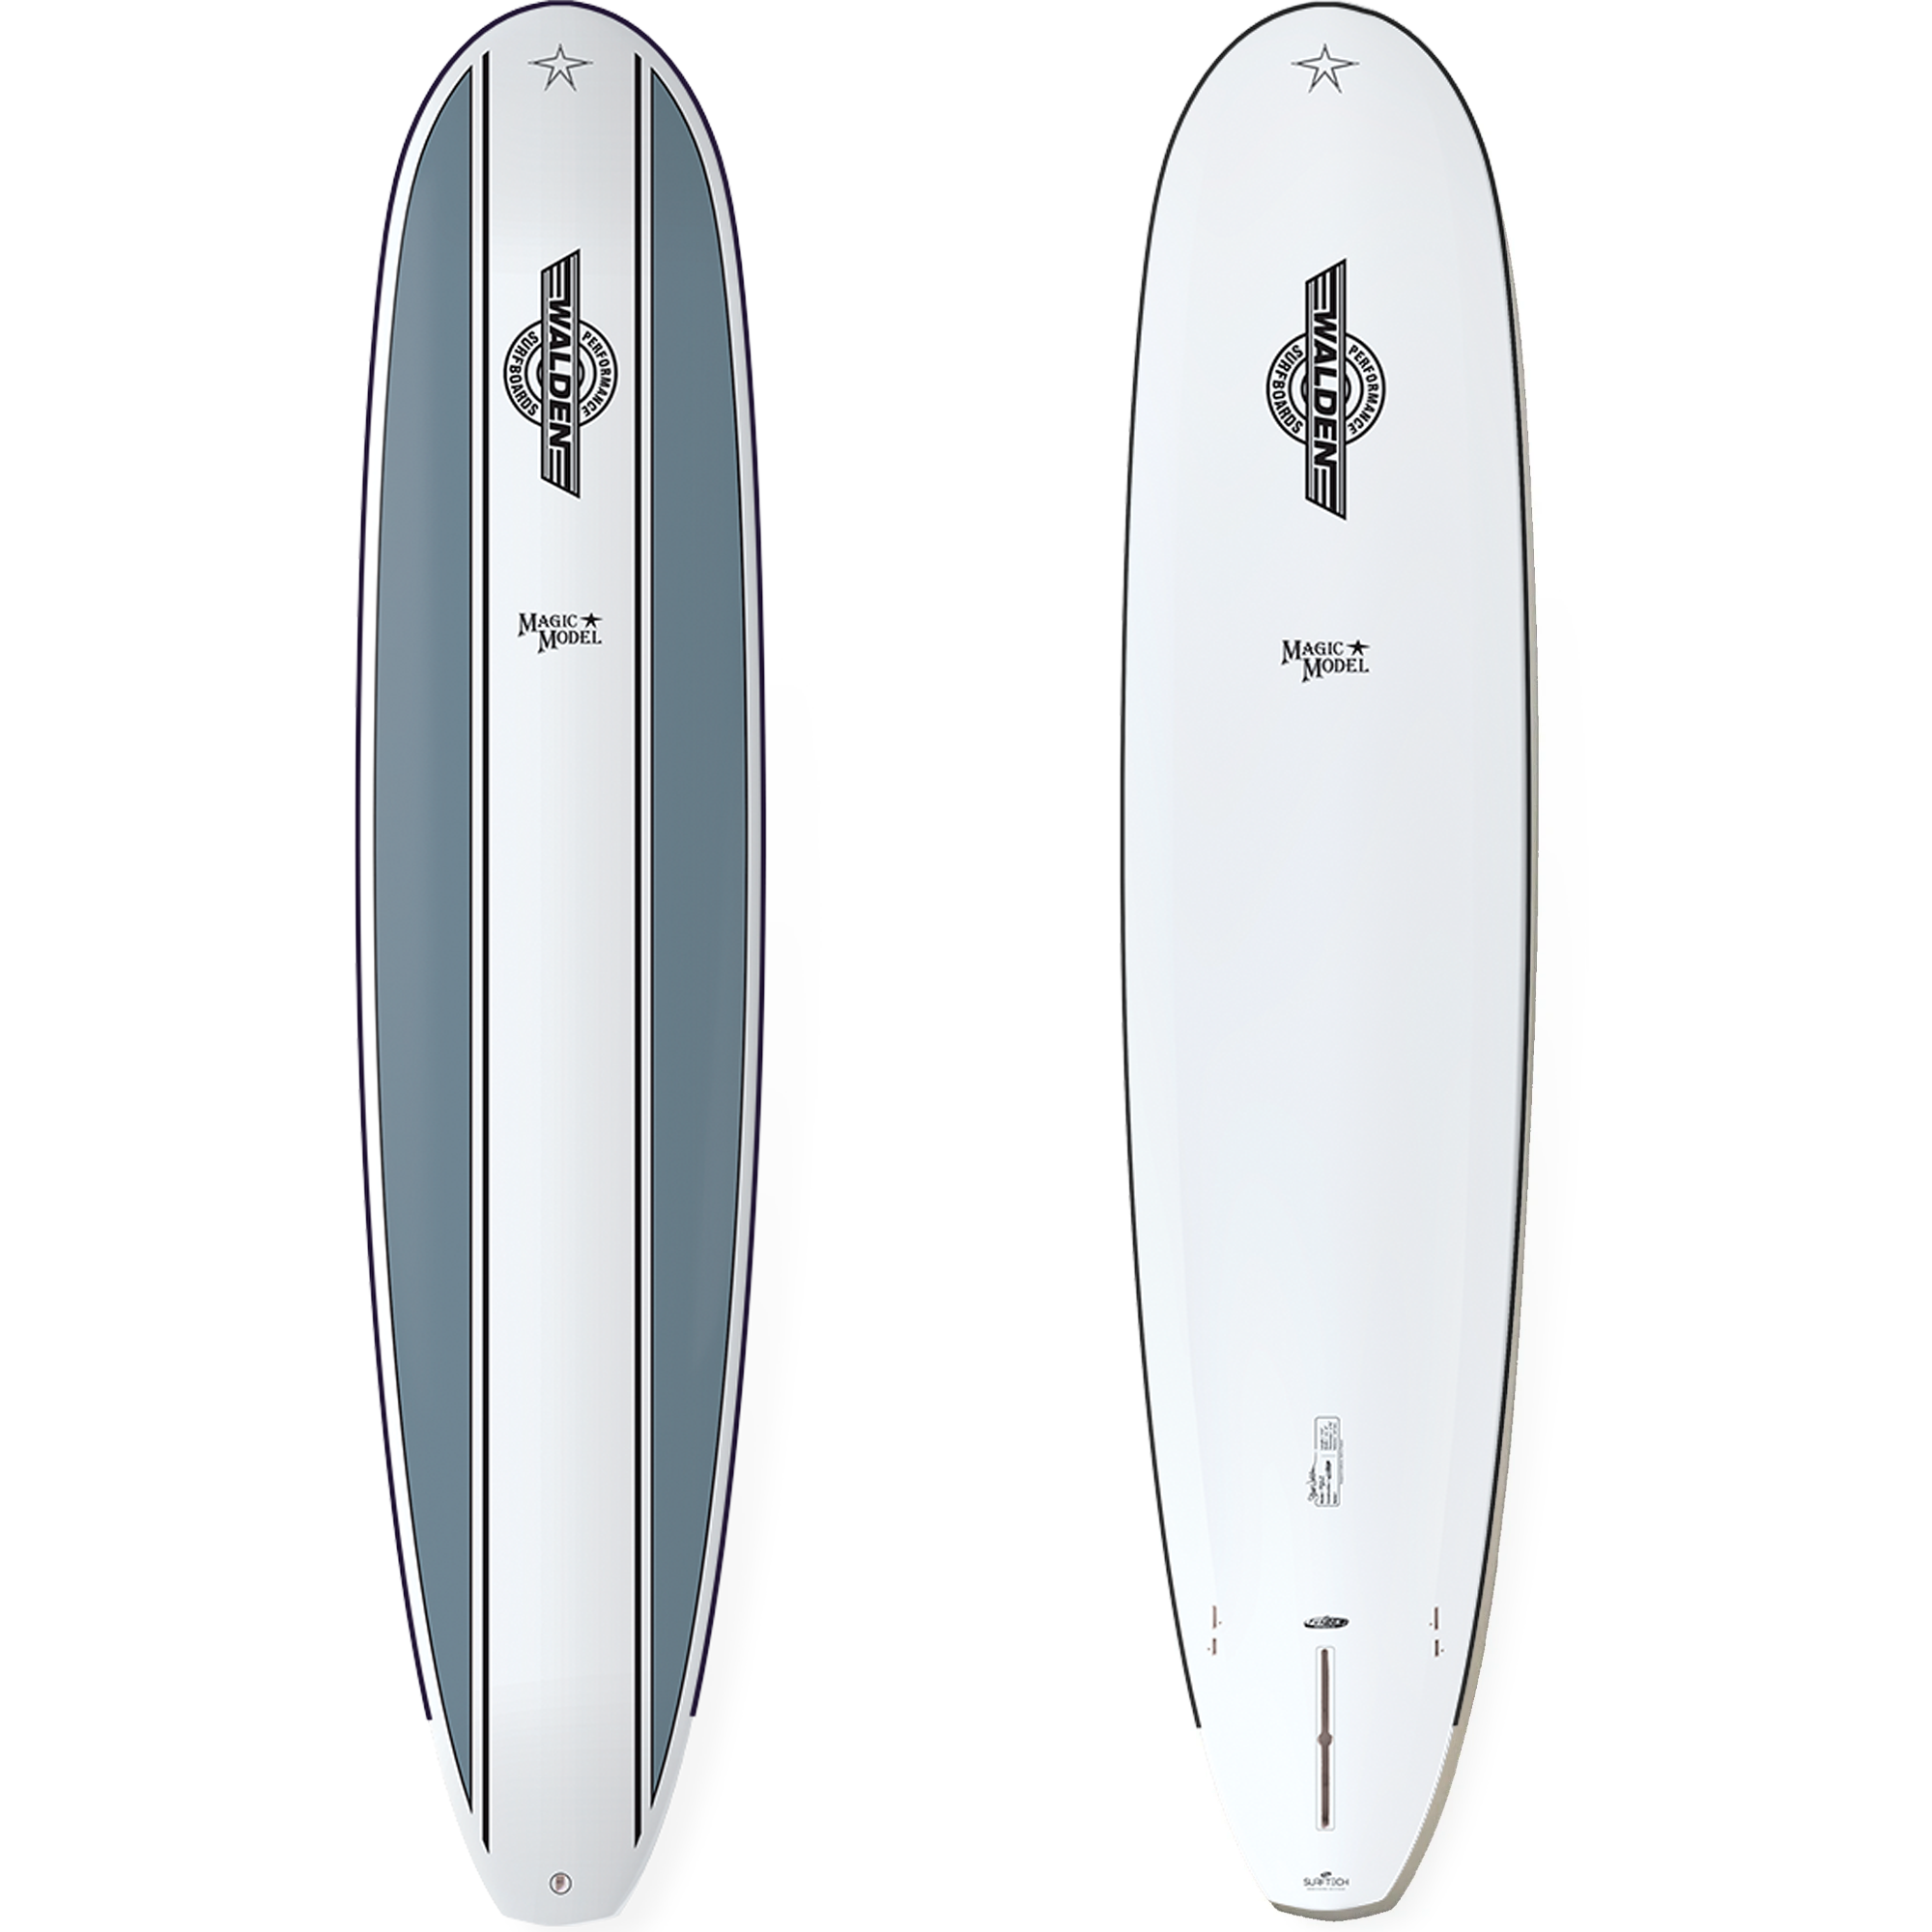 Walden Magic Model Fusion Parabolic Surfboard